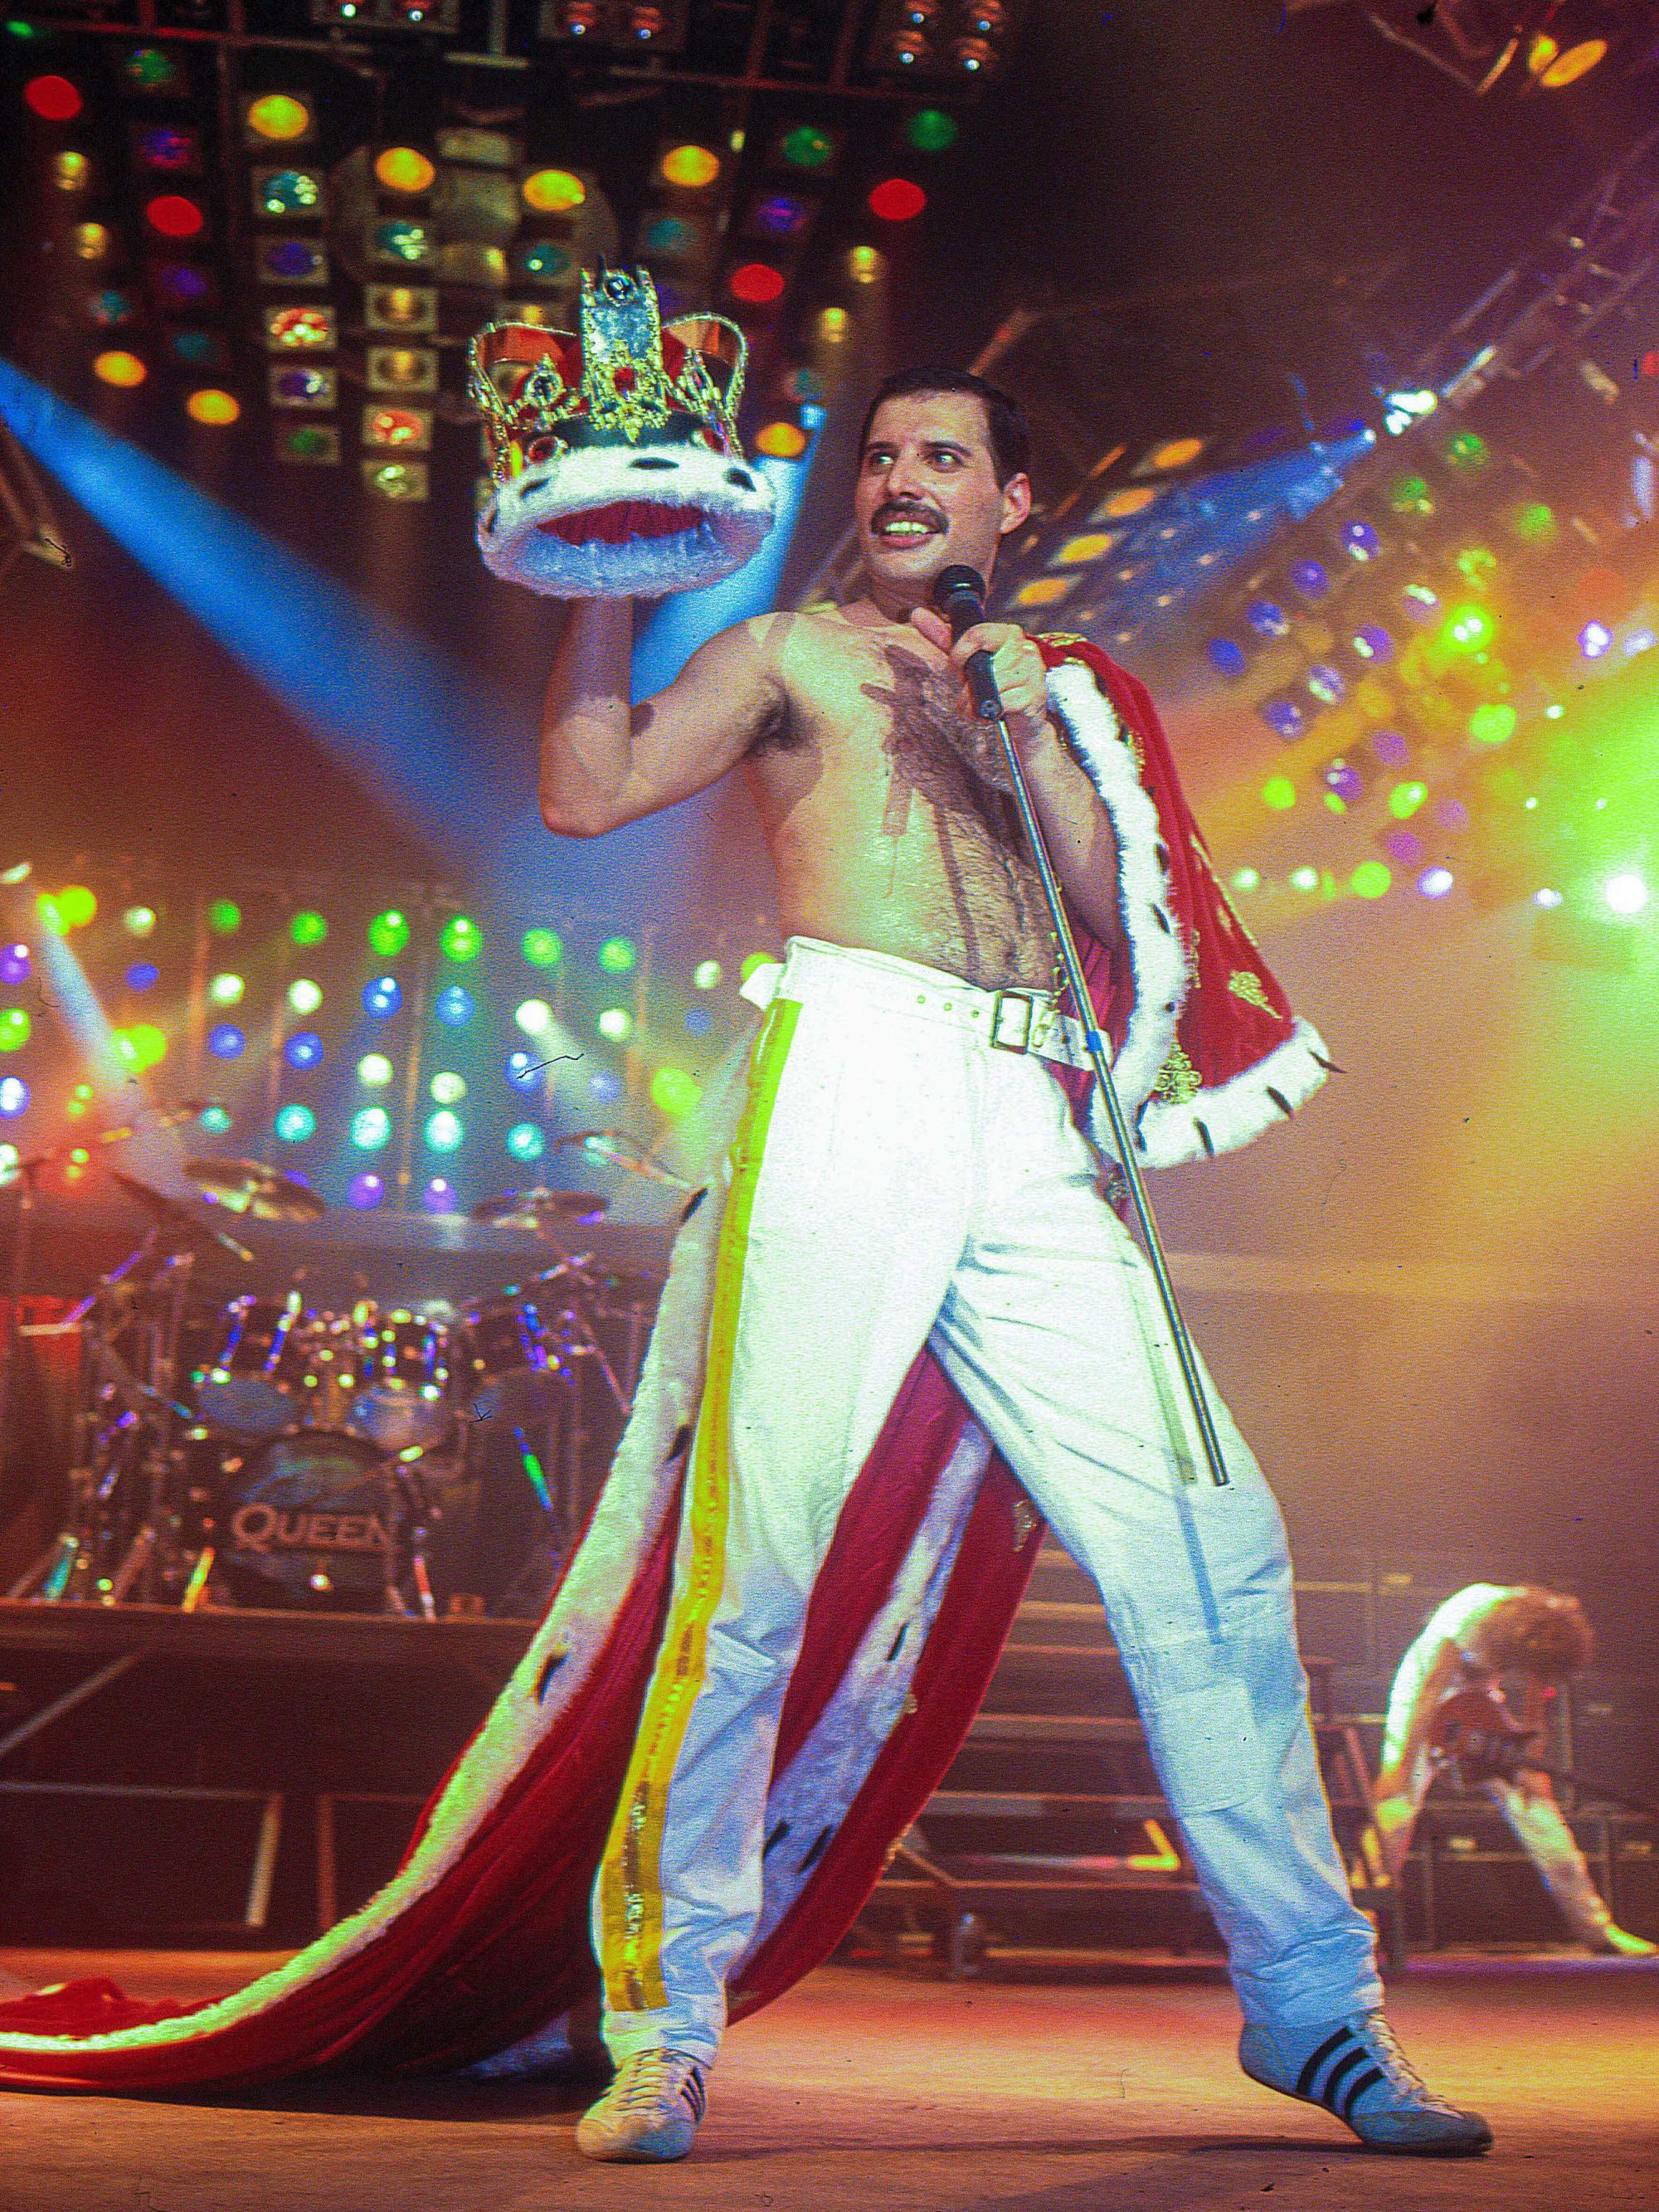 Freddie Mercury: Queen star's friend Mary Austin to auction his